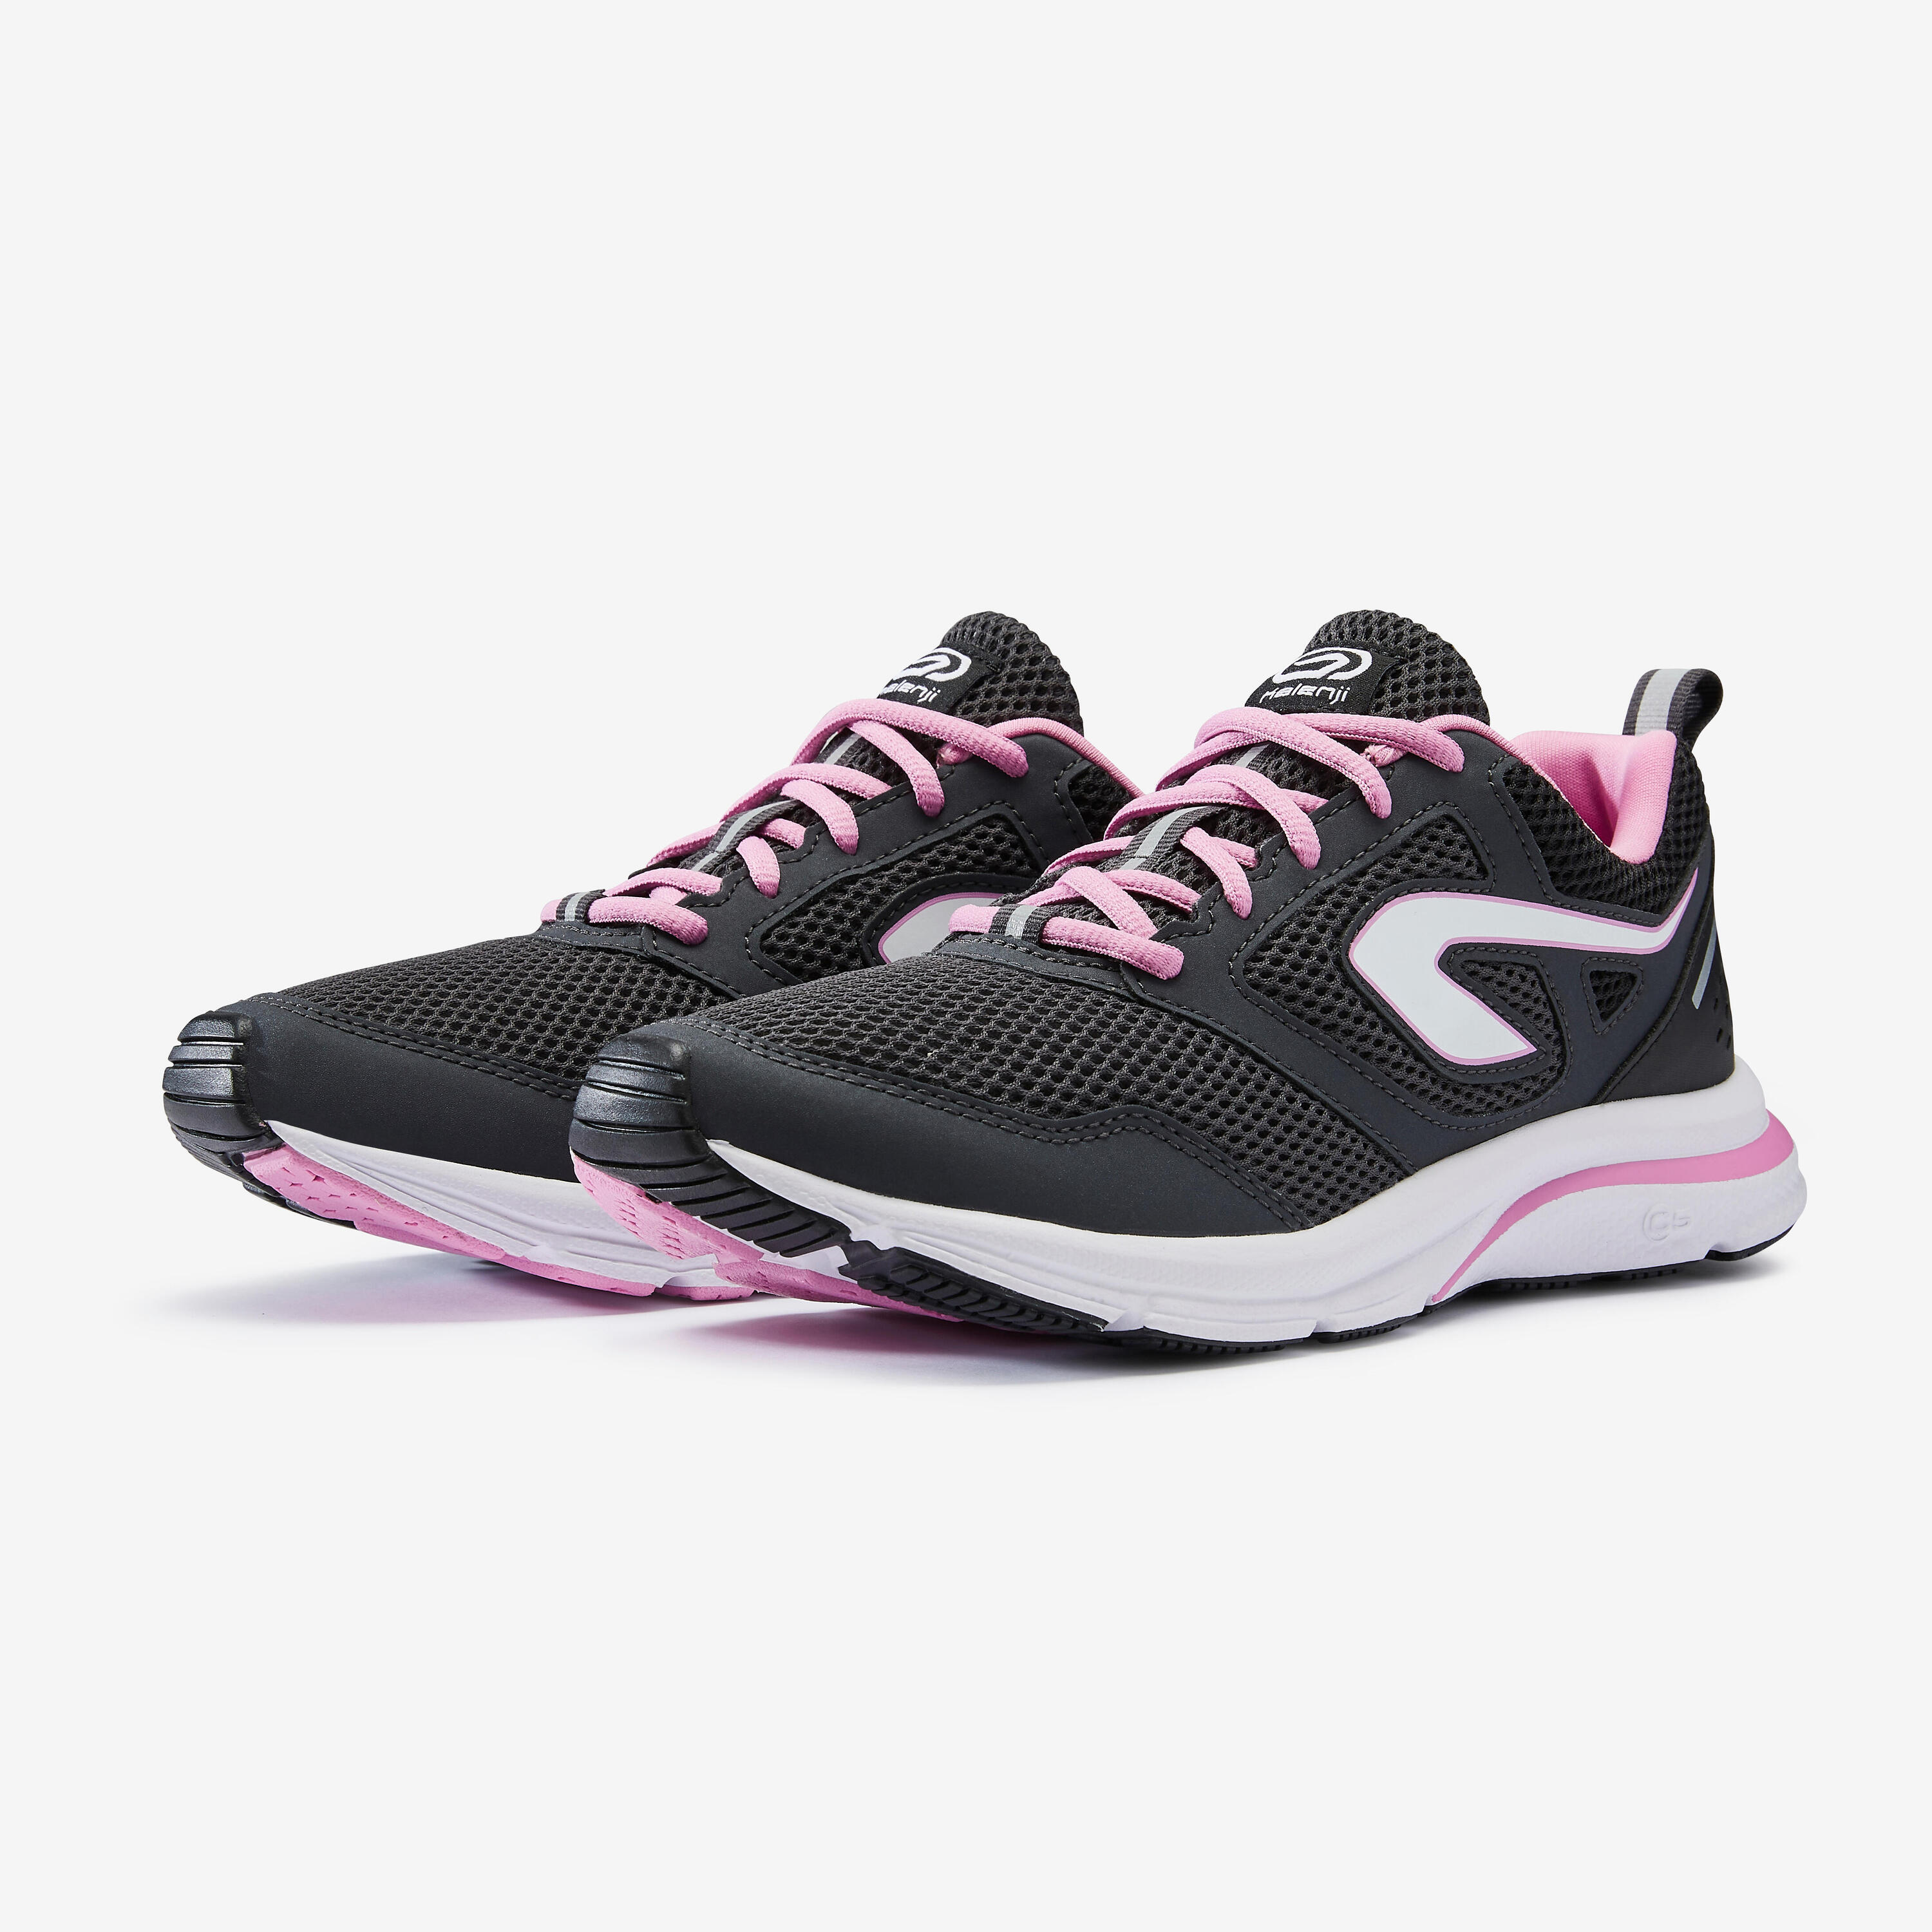 Run Active Women's Running Shoes - Black/Pink 5/7